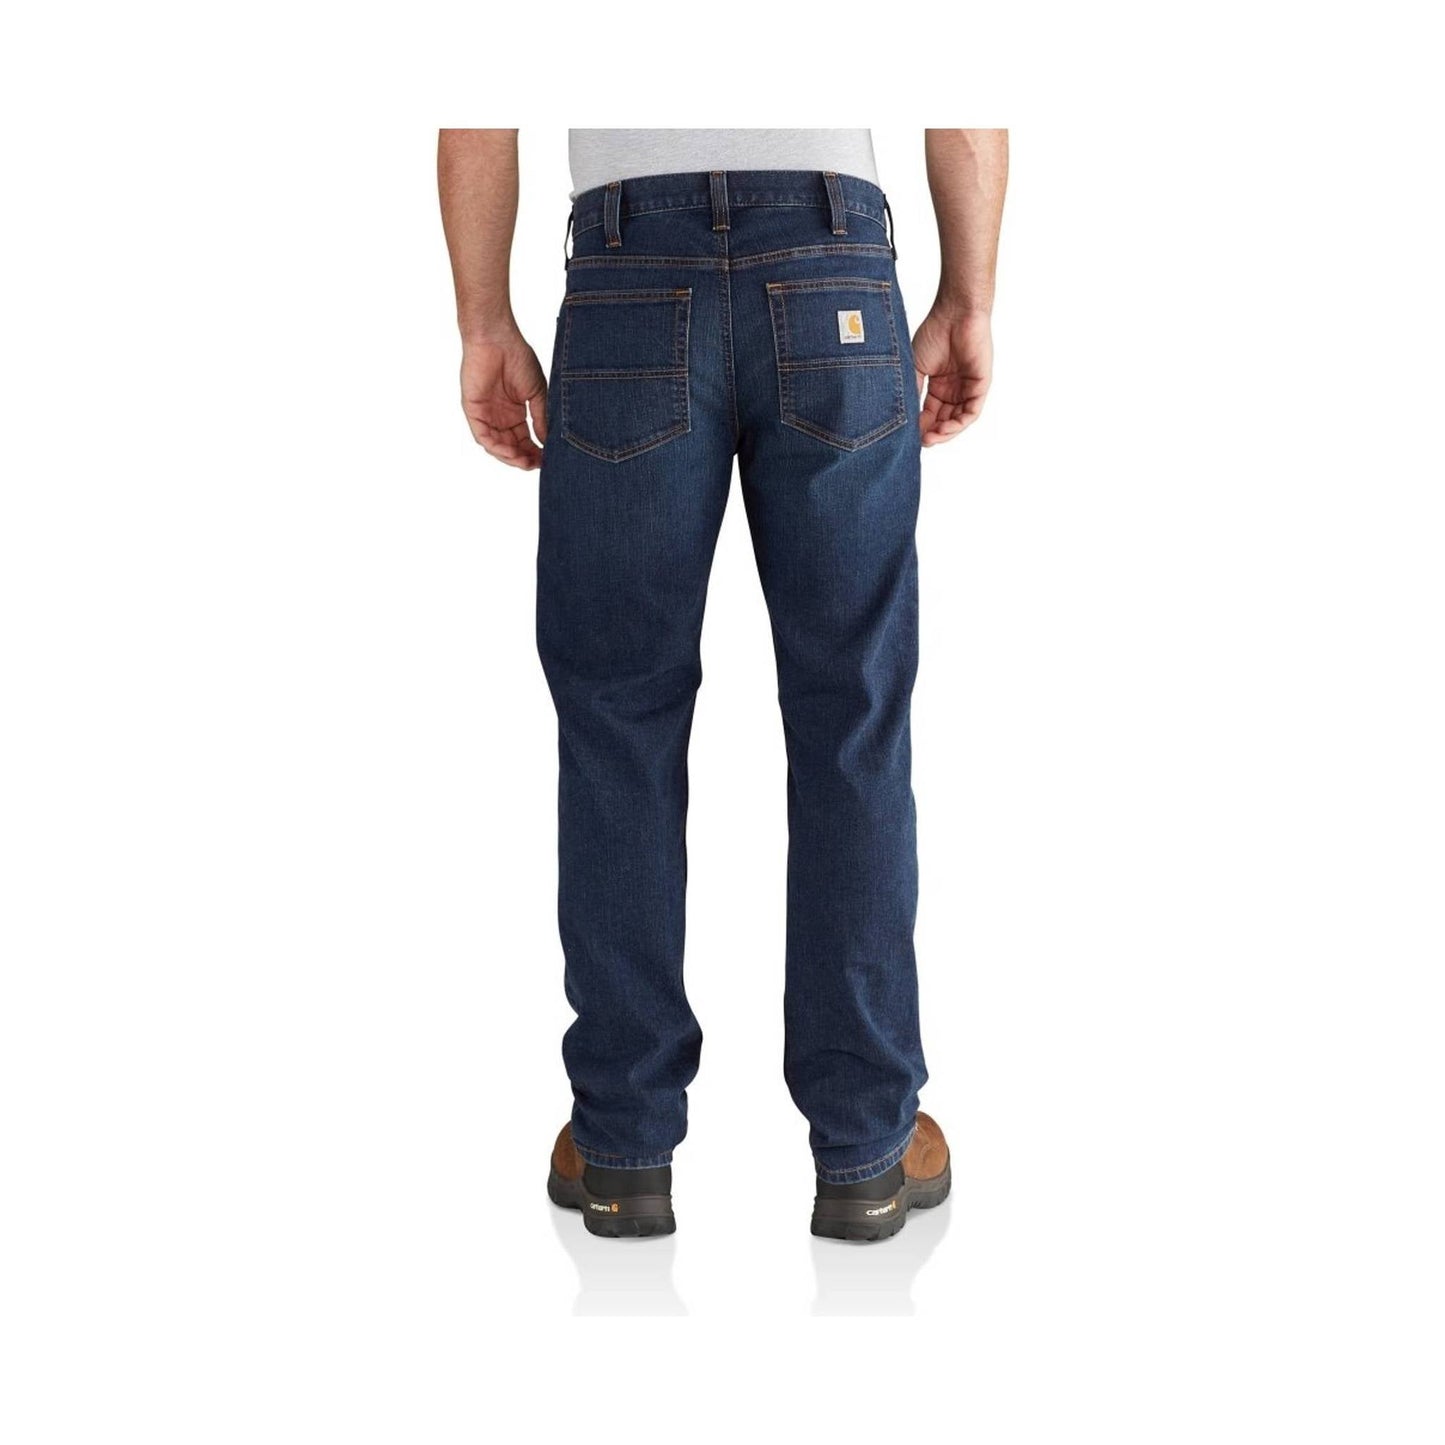 Carhartt Men's Rugged Flex Relaxed Straight Jean - Superior